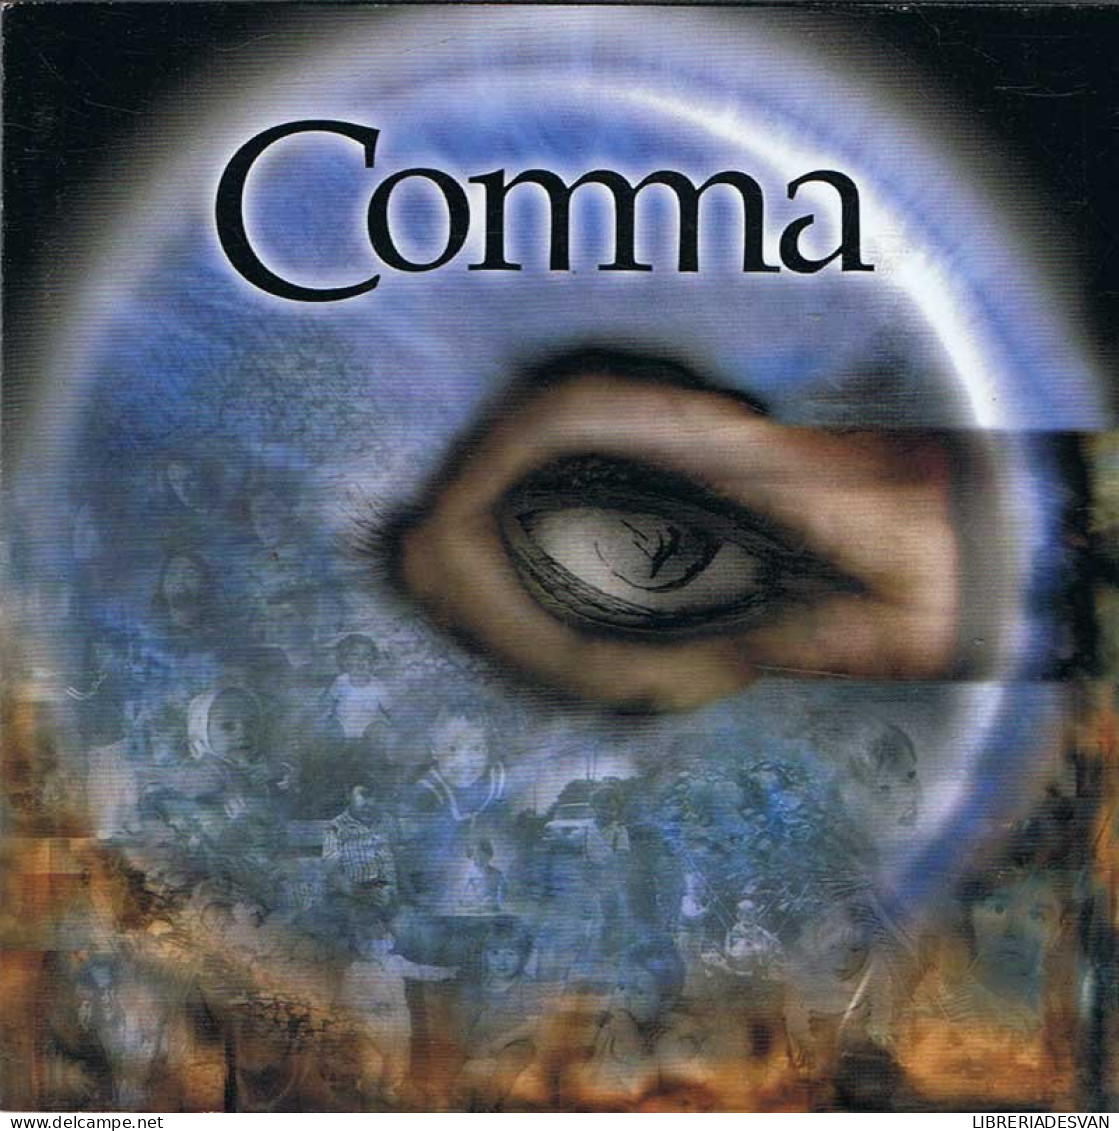 Comma - Elusive Dreams. CD - Rock